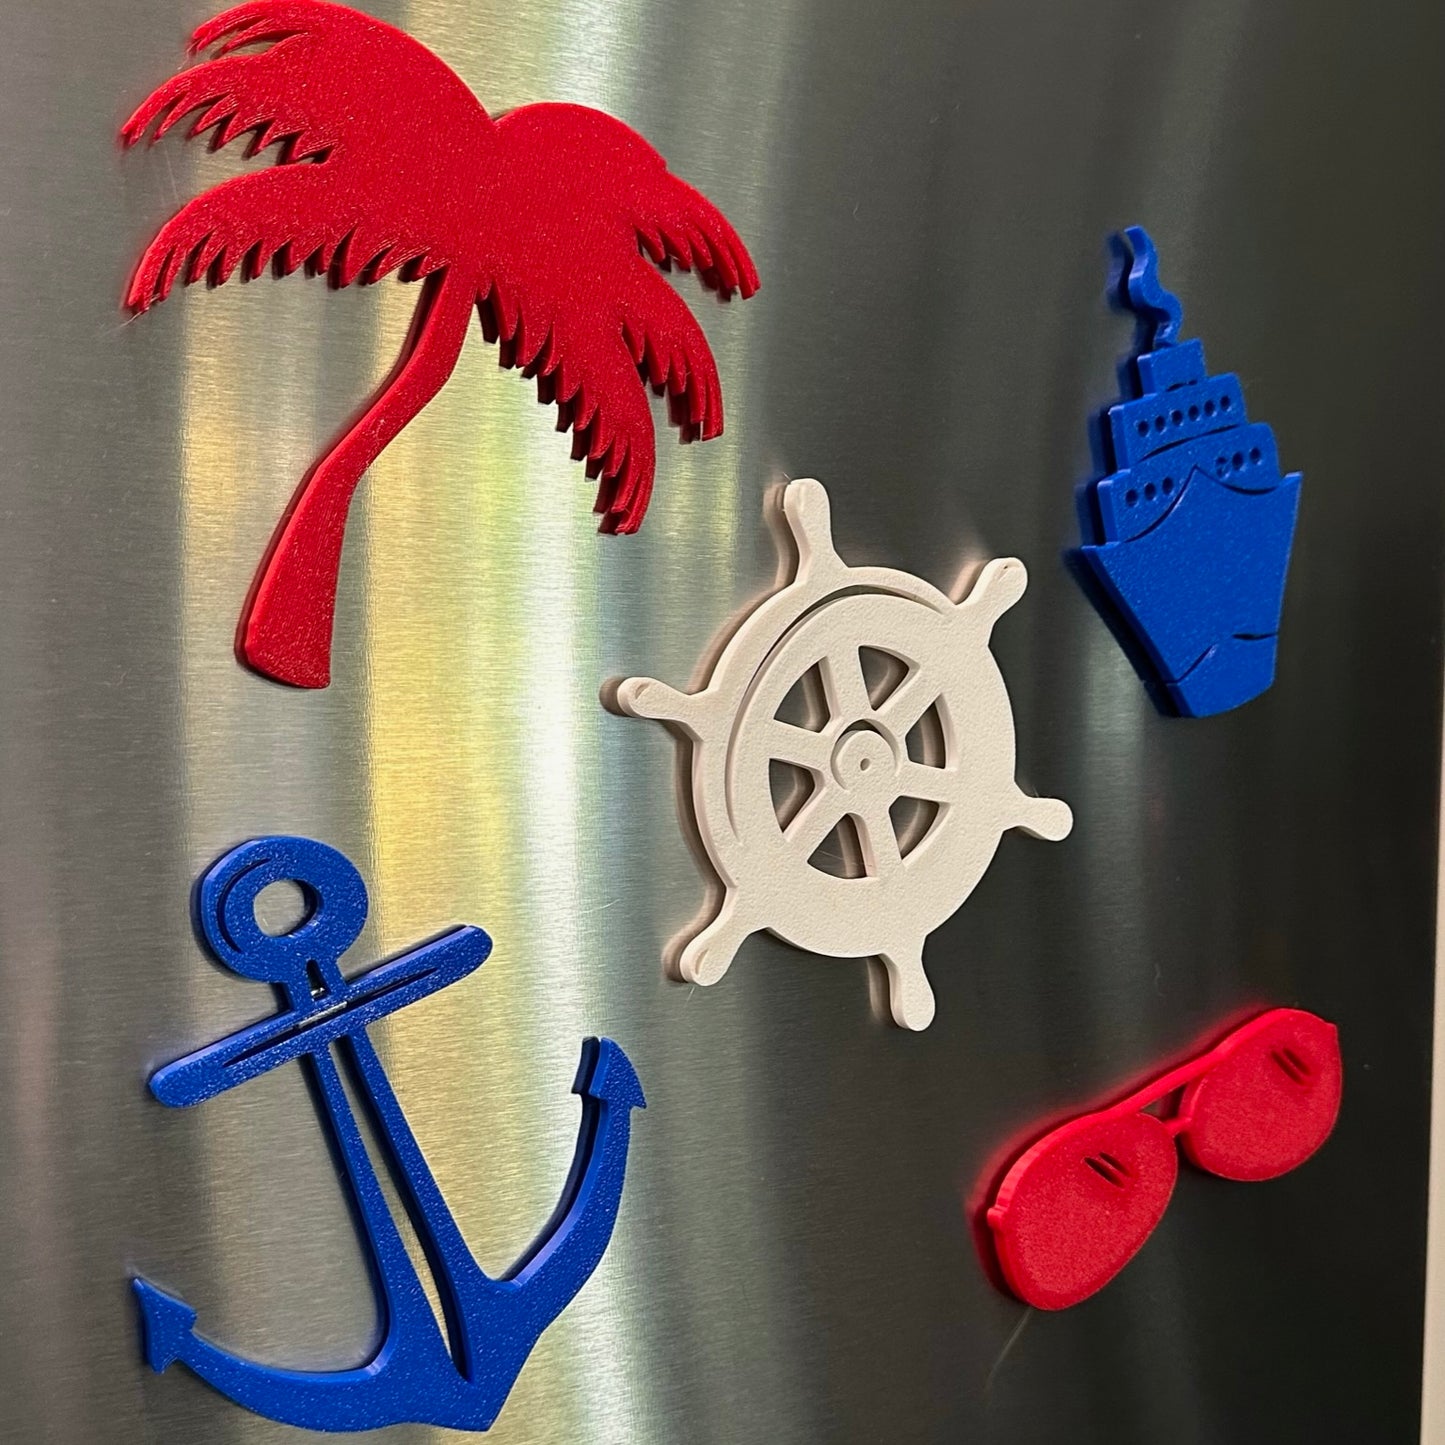 3D Printed Cruise Door Magnets